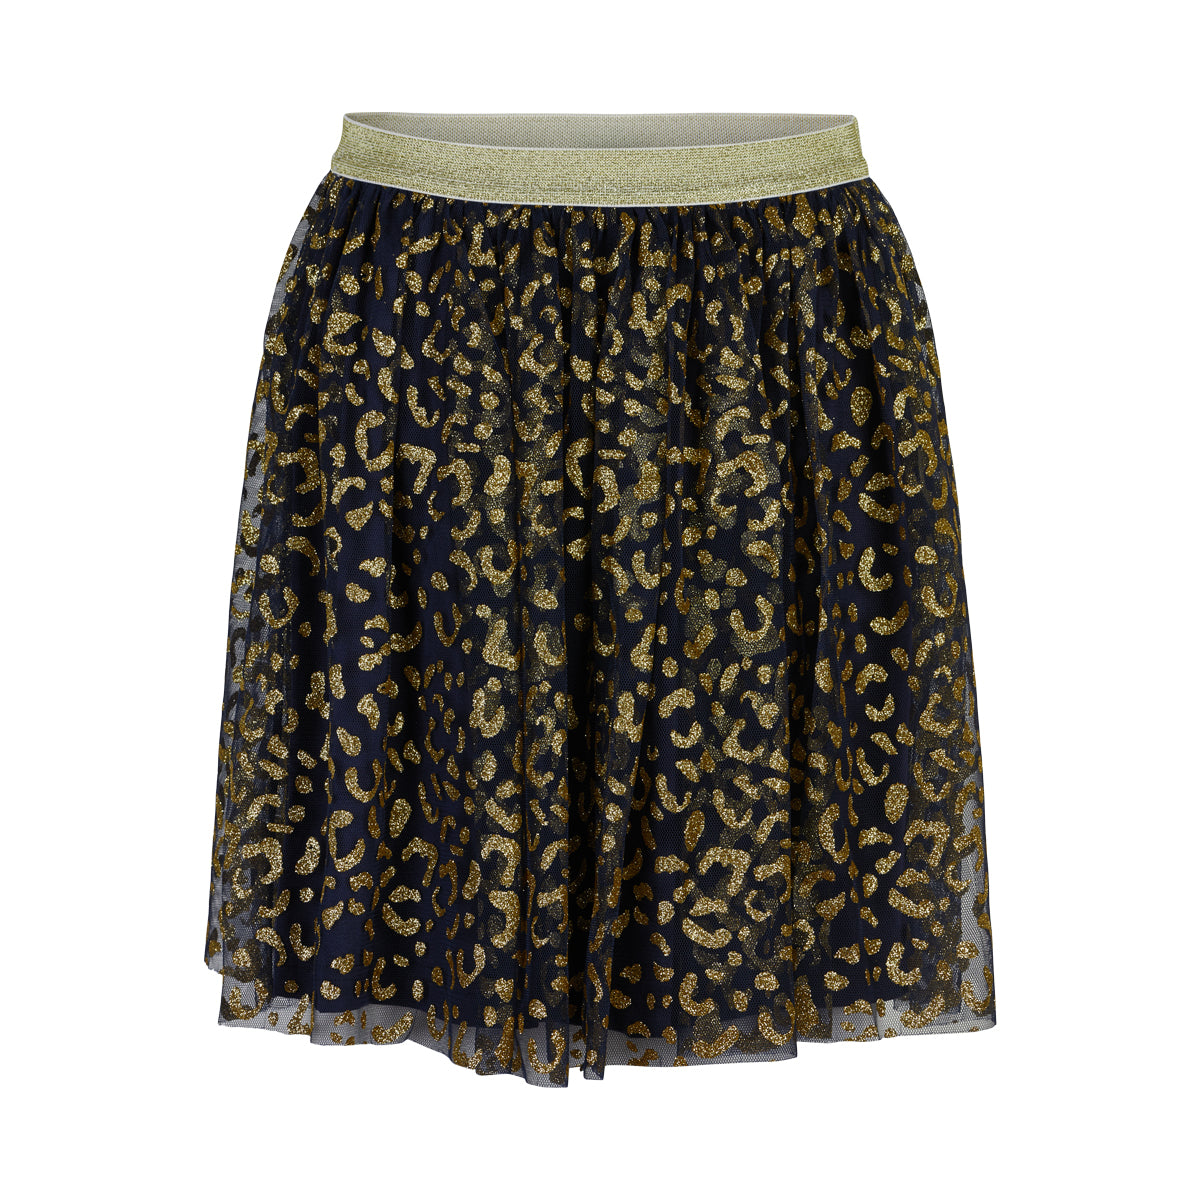 THE NEW - Anna Stella Skirt (TN3293) - Navy Blazer / Gold